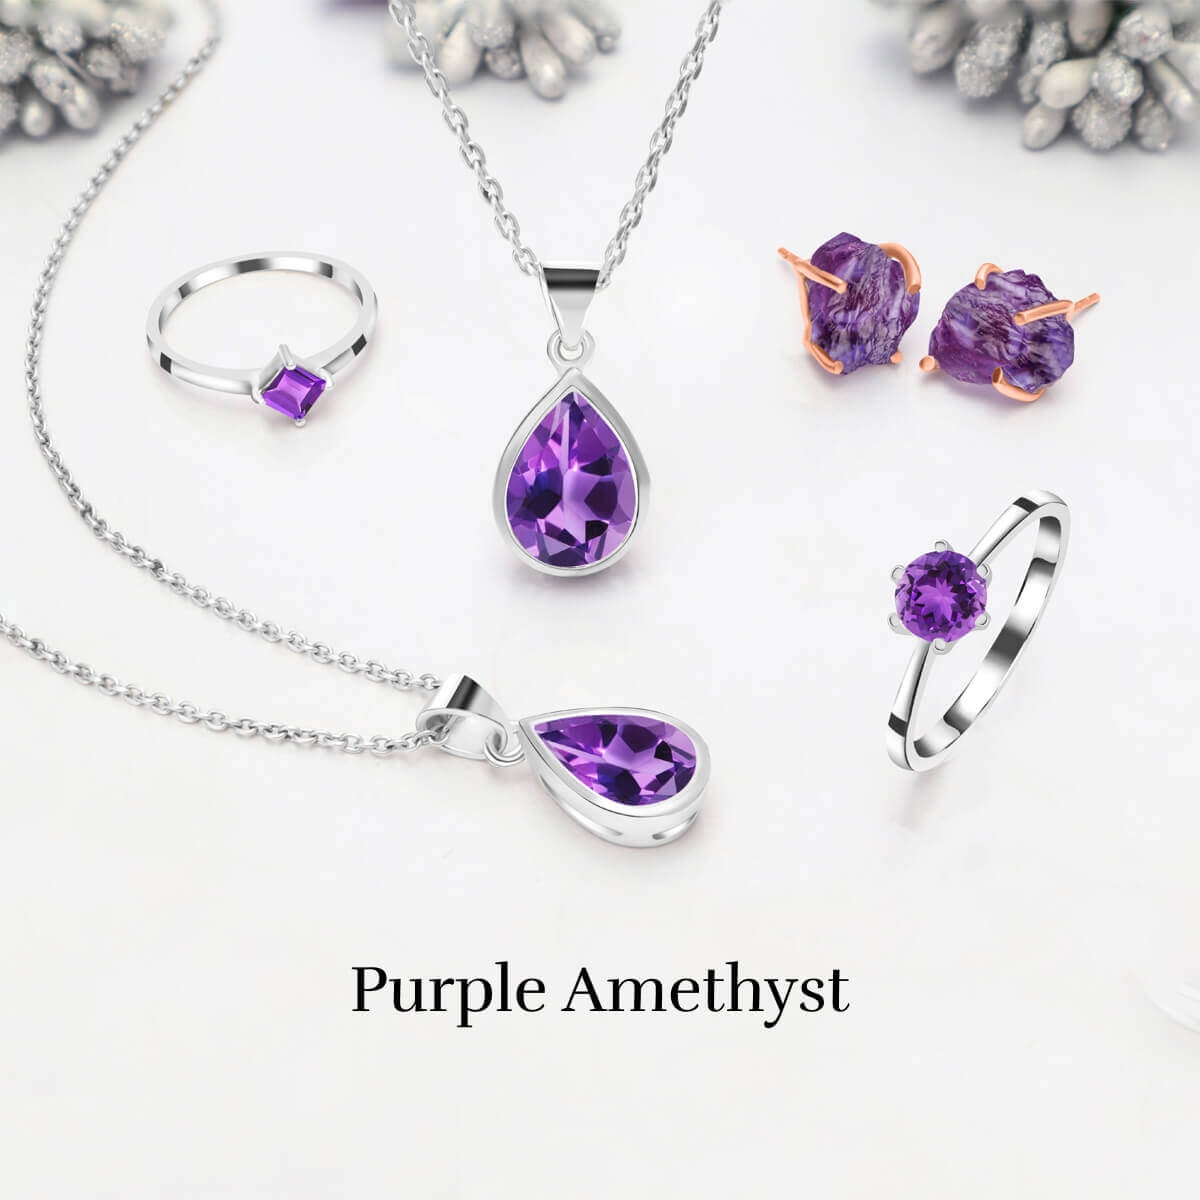 Amethyst Jewelry